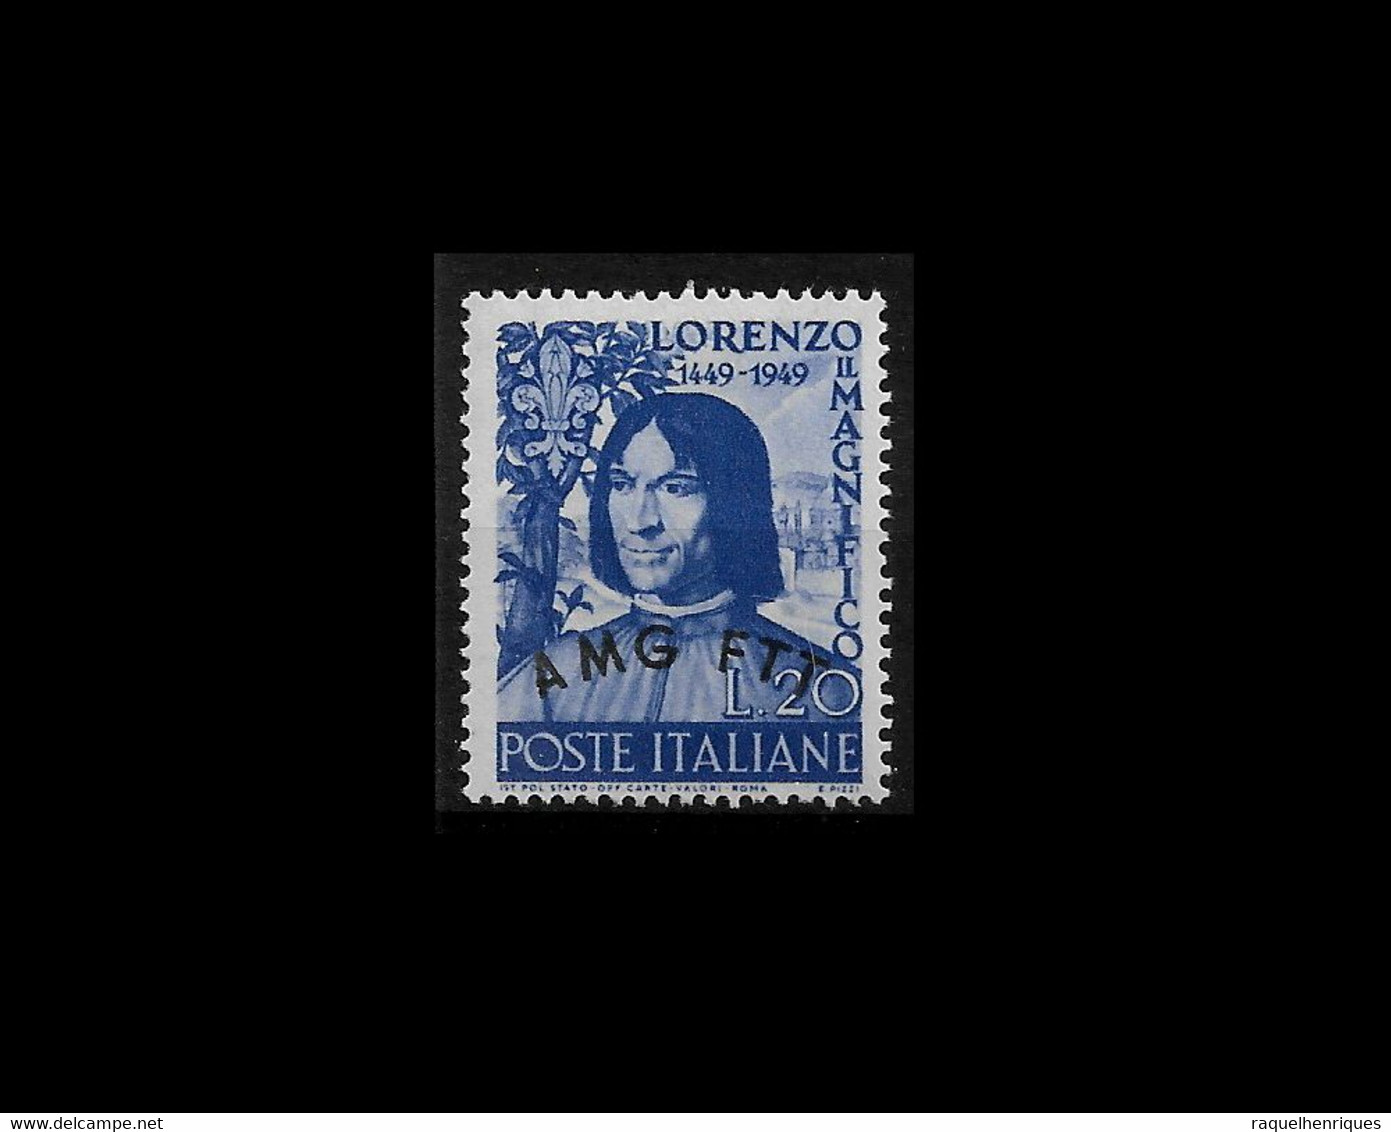 ITALY STAMP - TRIESTE ZONE A - 1949 The 500th An.Birth Of Lorenzo Medici - AMG FTT MH (BA5#58) - Egeo (Amministrazione Autonoma)